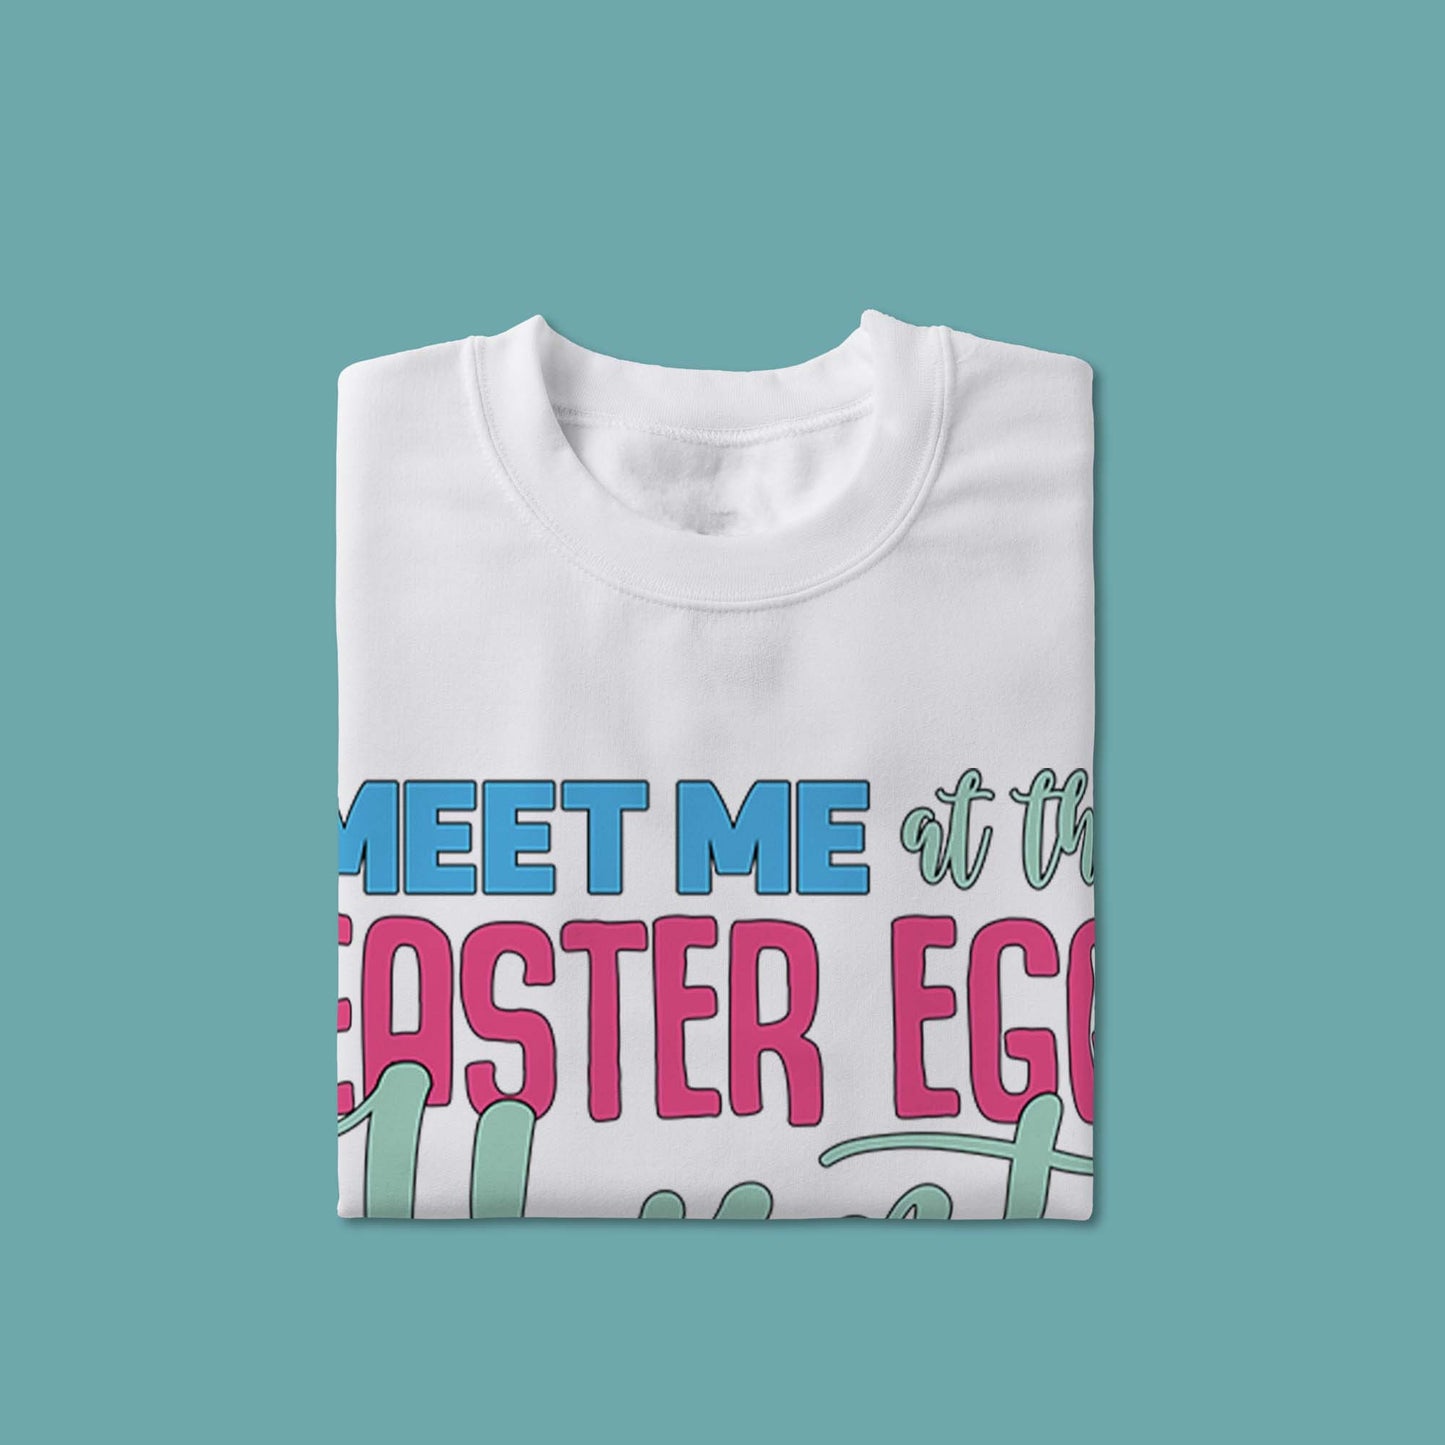 Pea Pea Meet Me At The Easter Egg Hunt - Camiseta para jóvenes